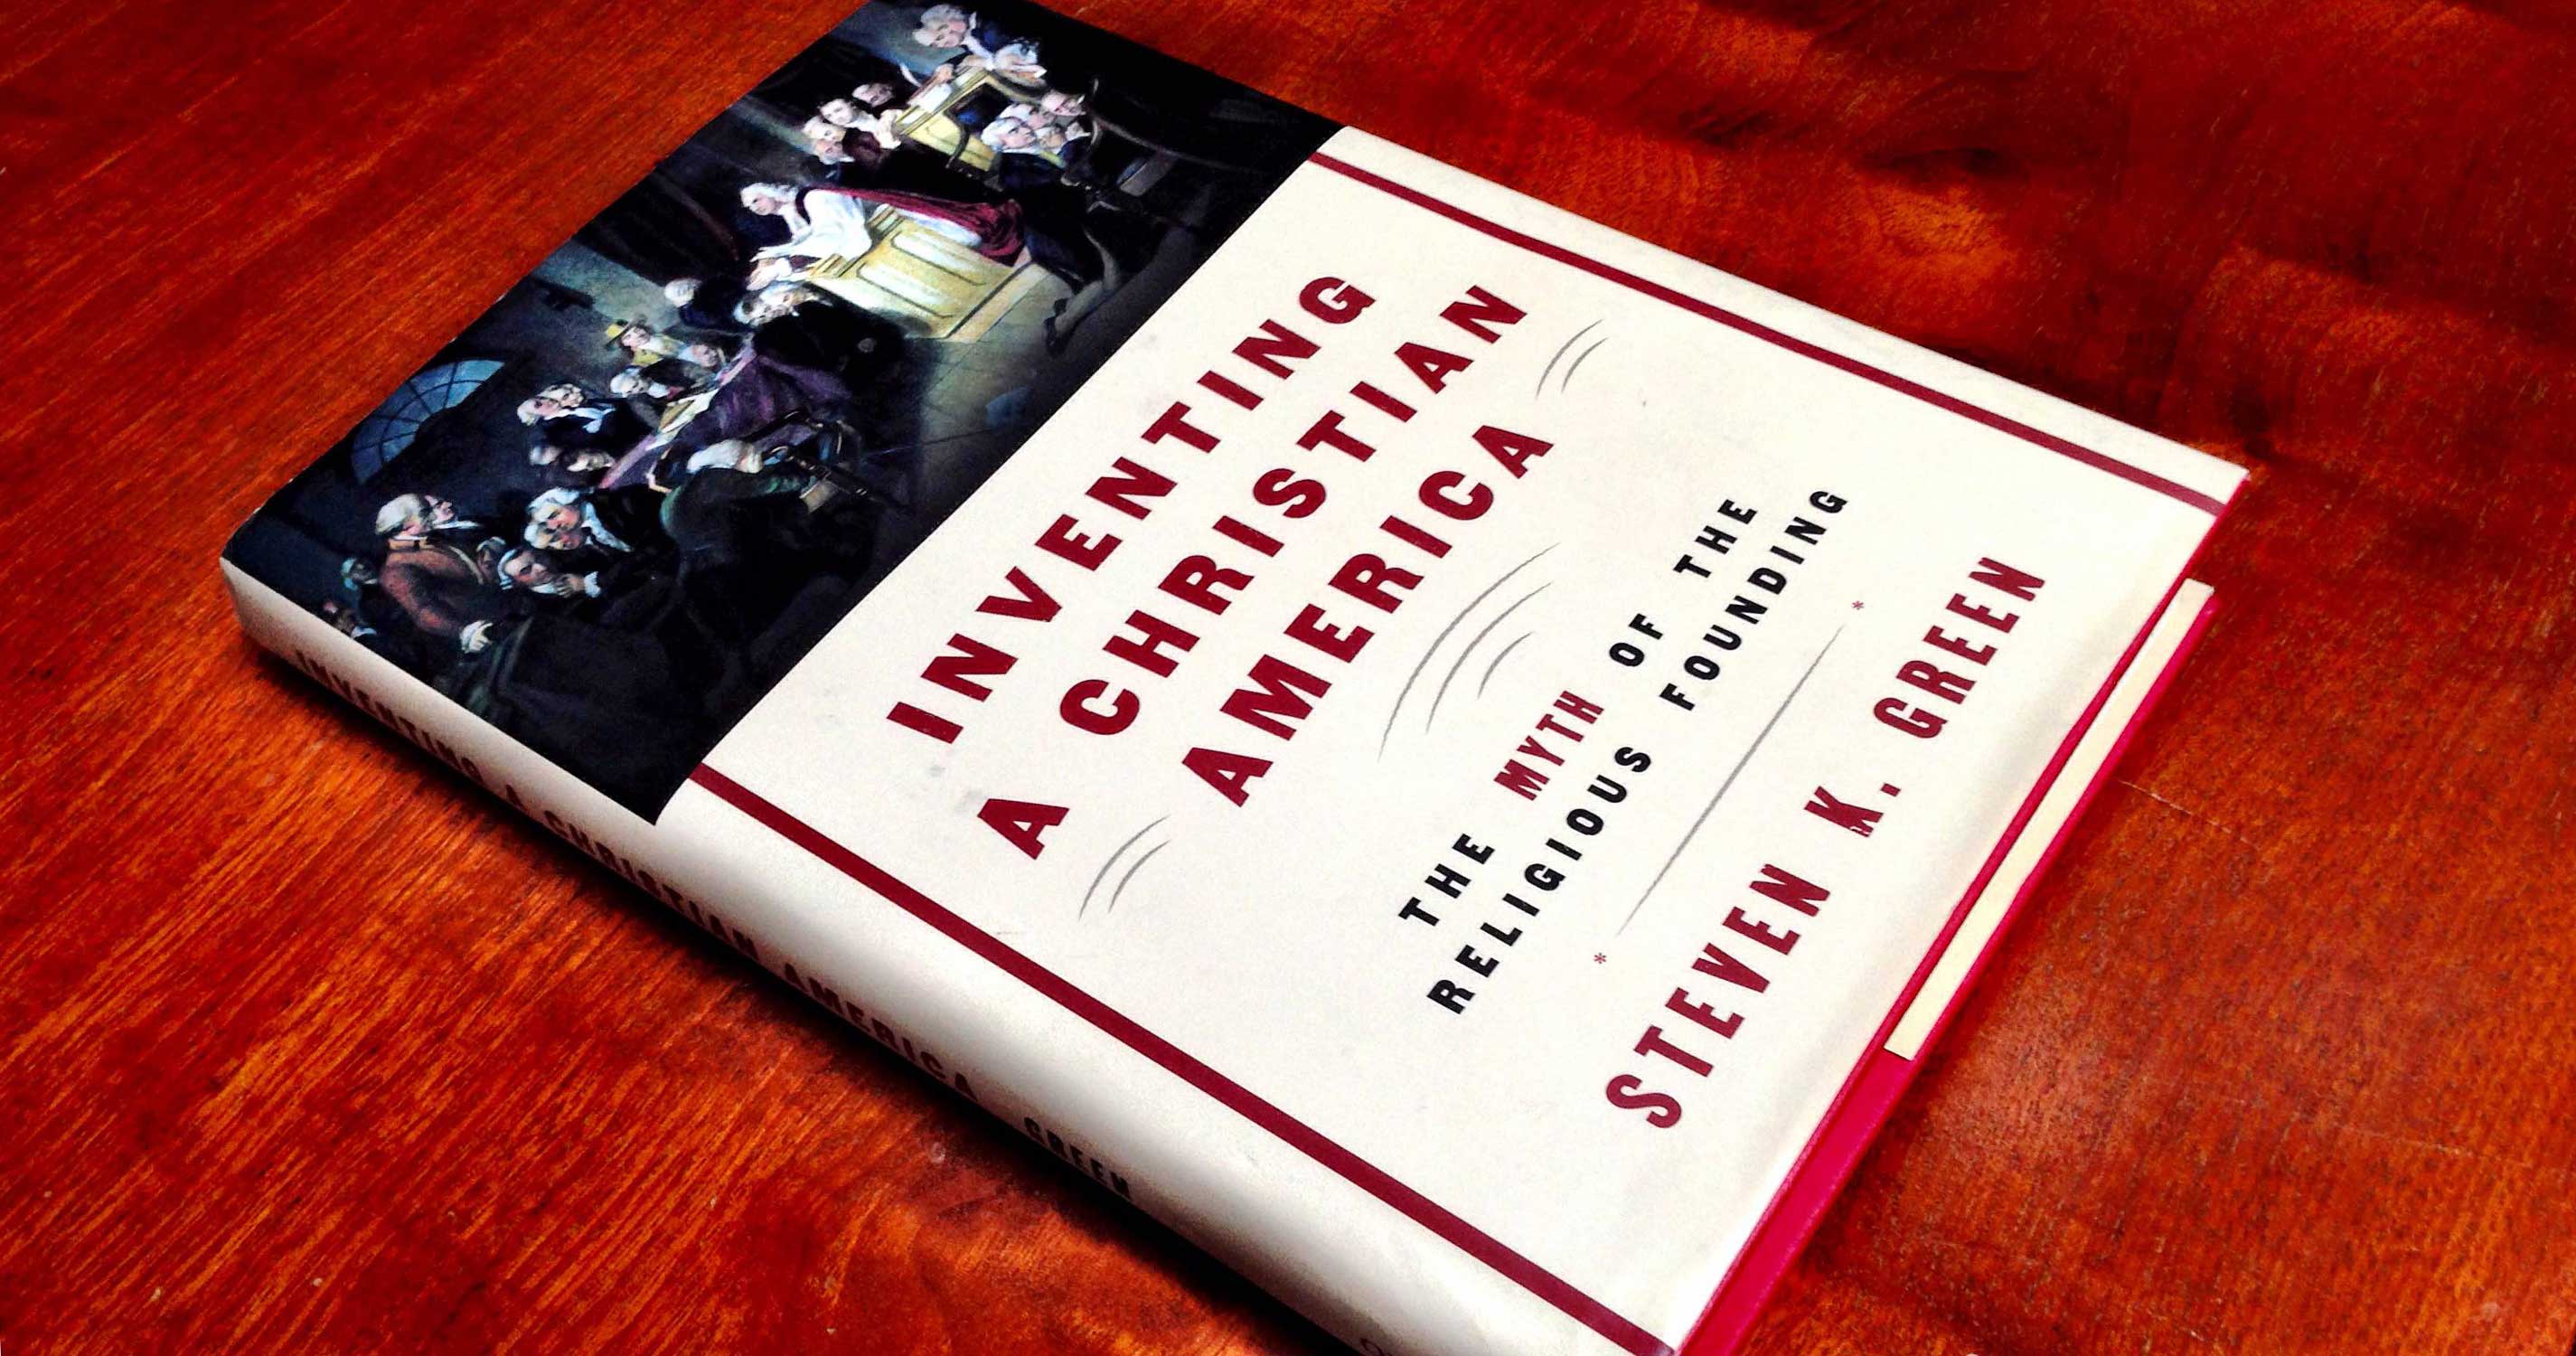 Inventing a Christian America